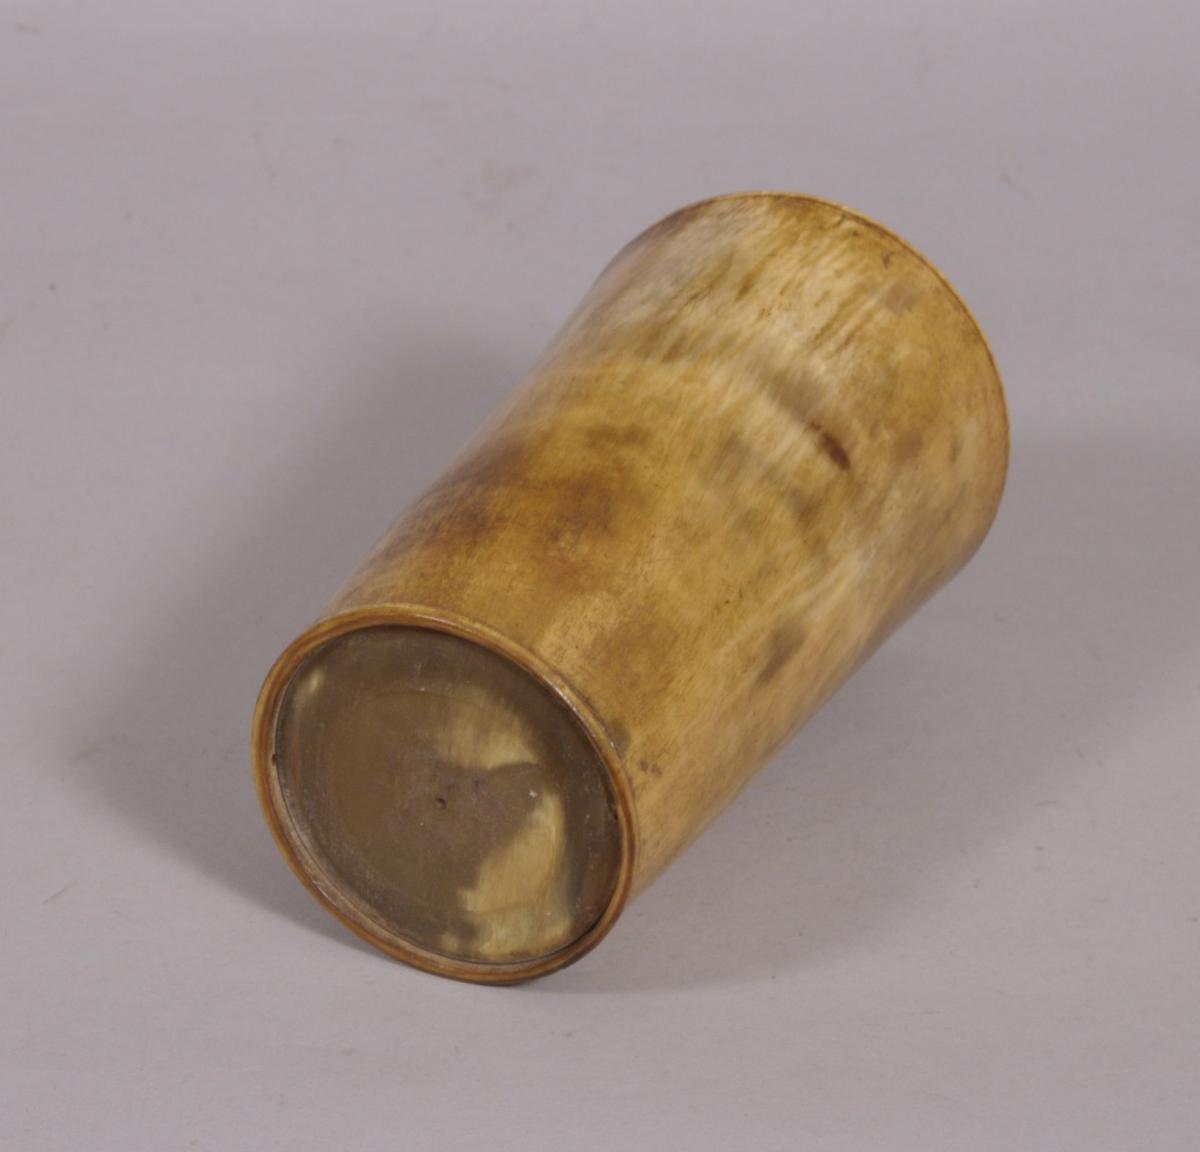 S/3972A Antique 19th Century Large Blond Horn Ale Beaker